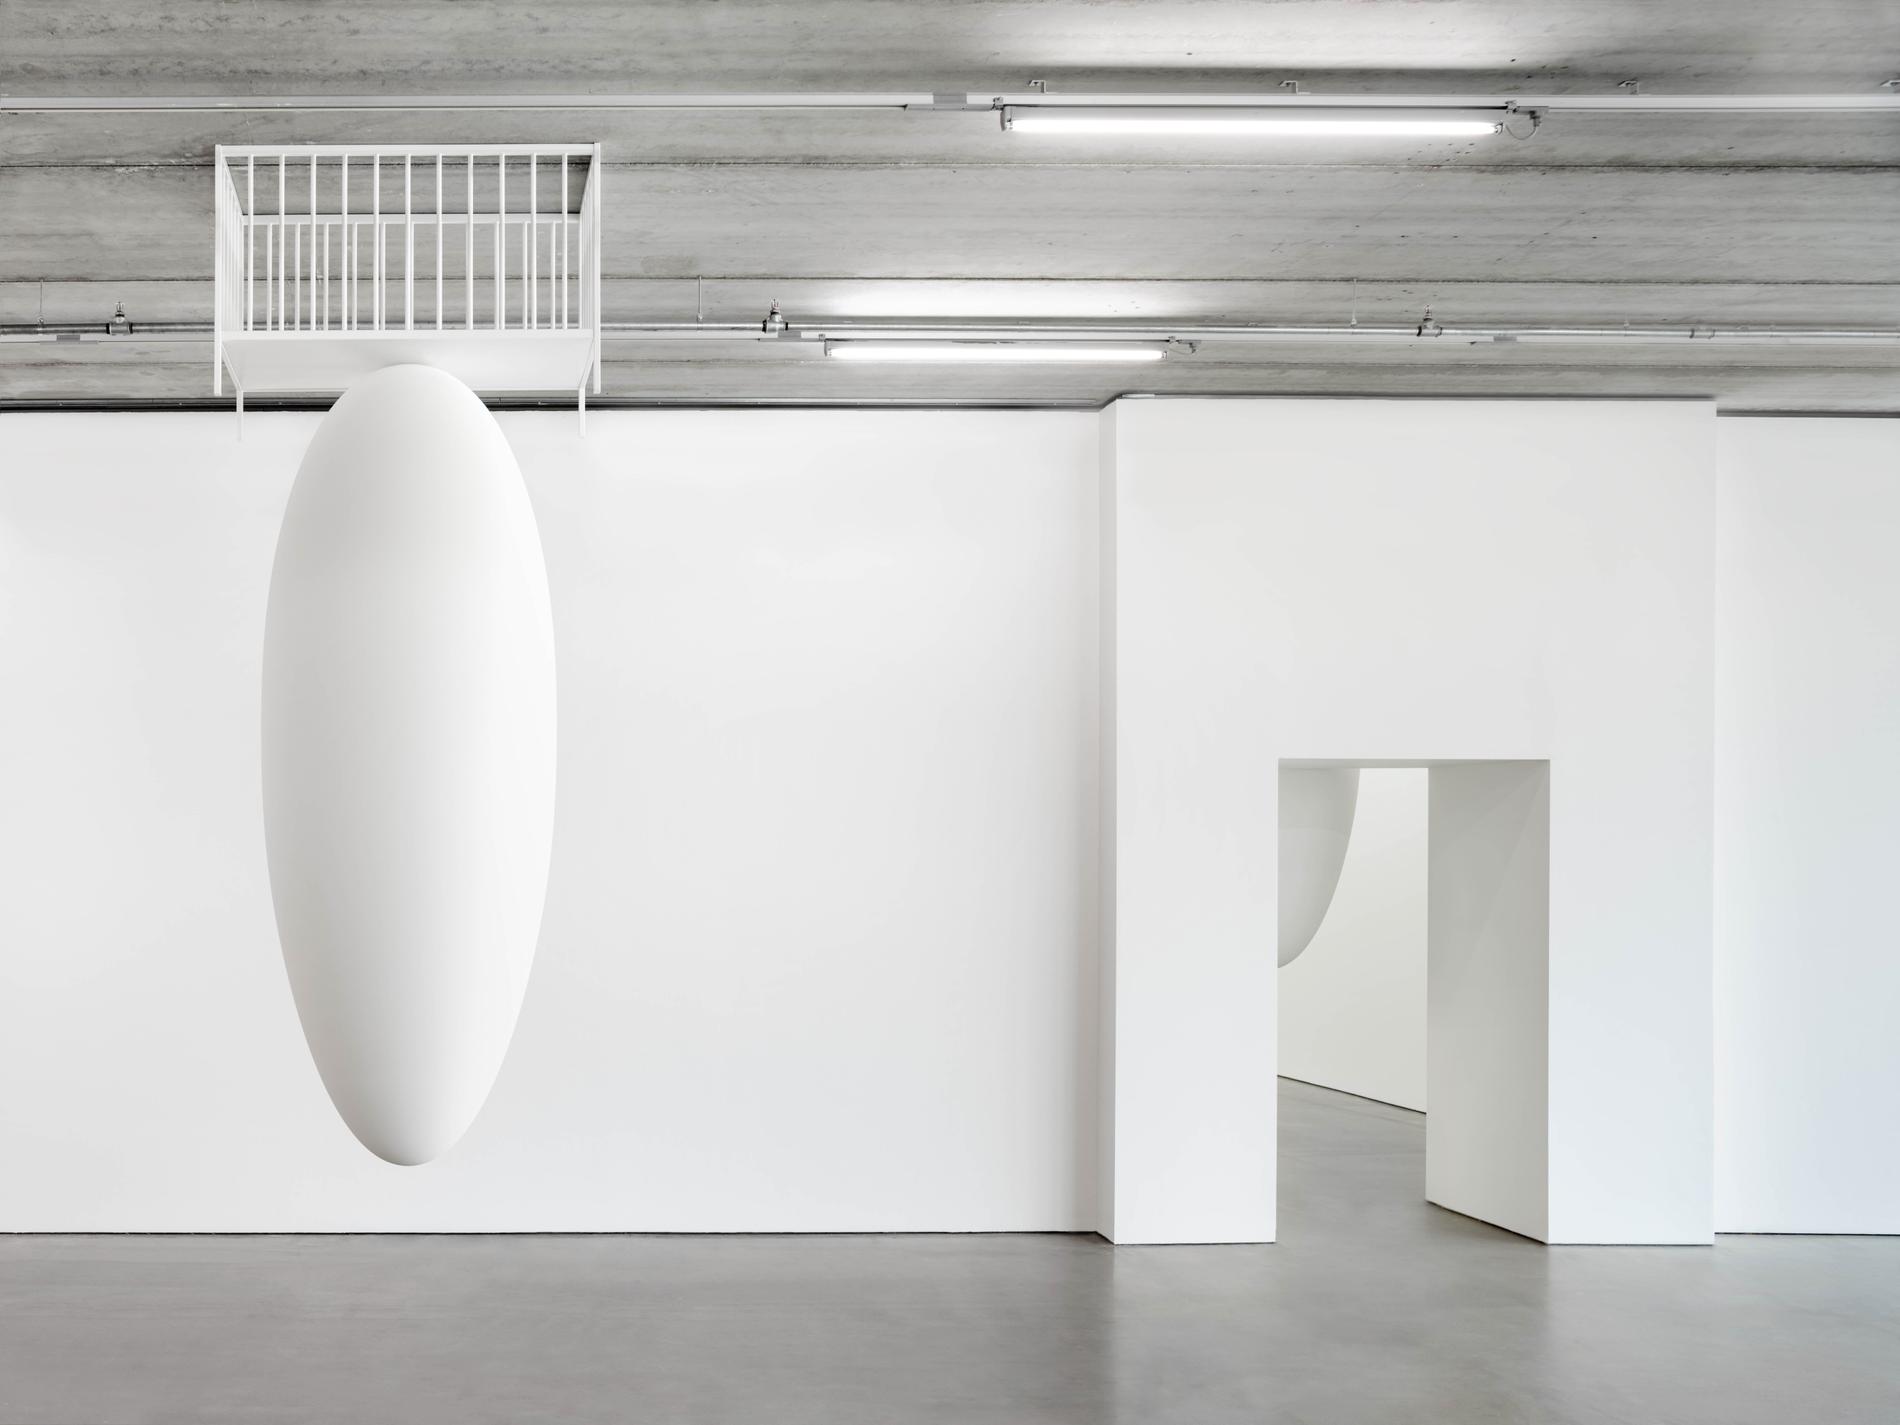 På Bonniers konsthall i Stockholm visas just nu ”Tarik Kiswanson: Becoming”